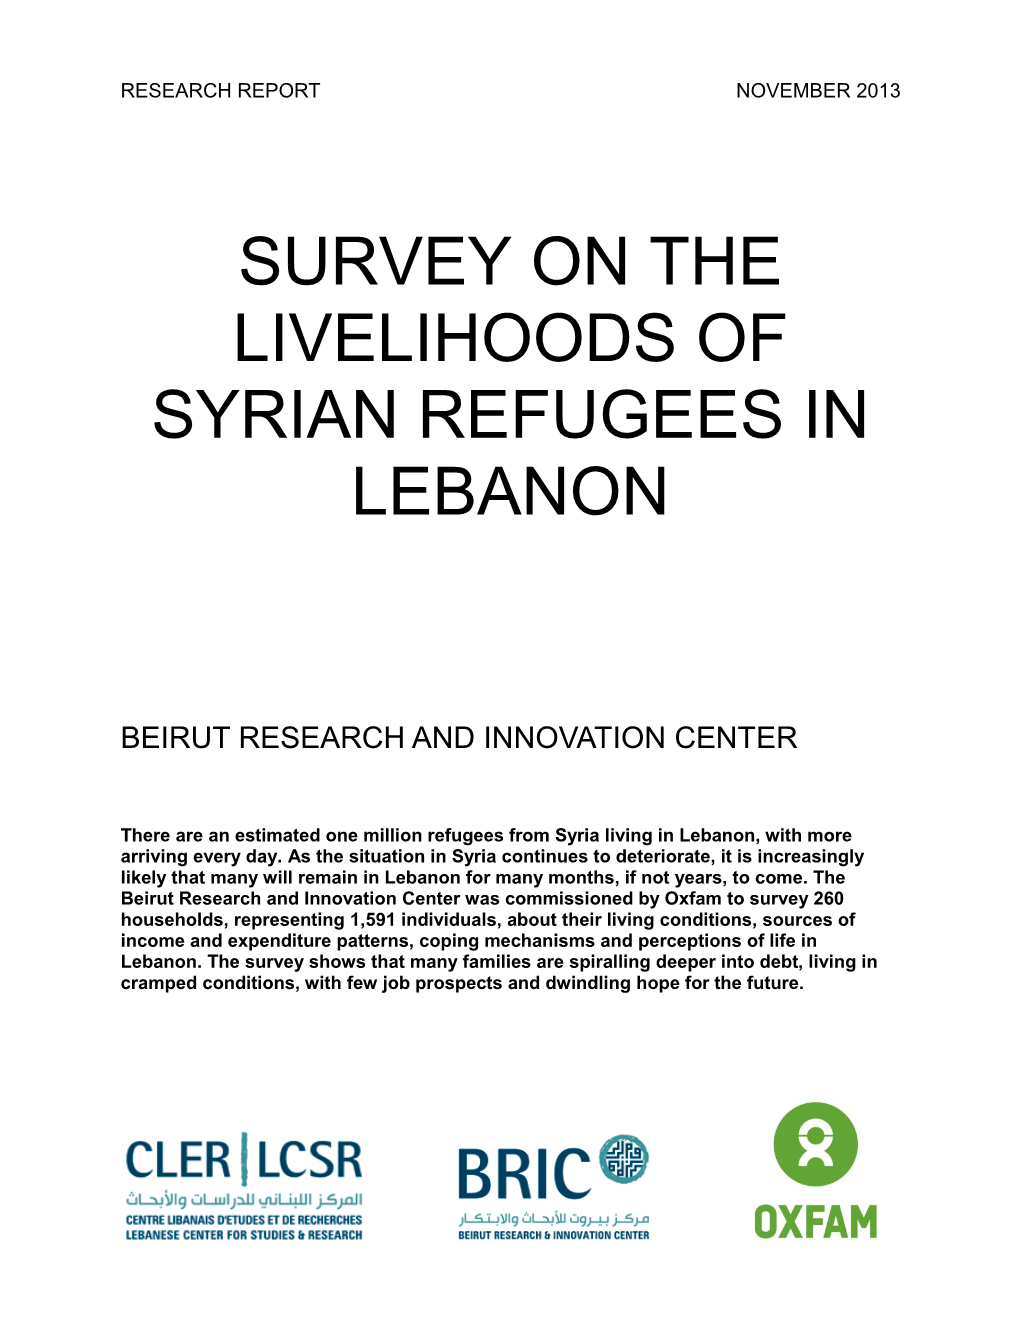 Survey on the Livelihoods of Syrian Refugees in Lebanon